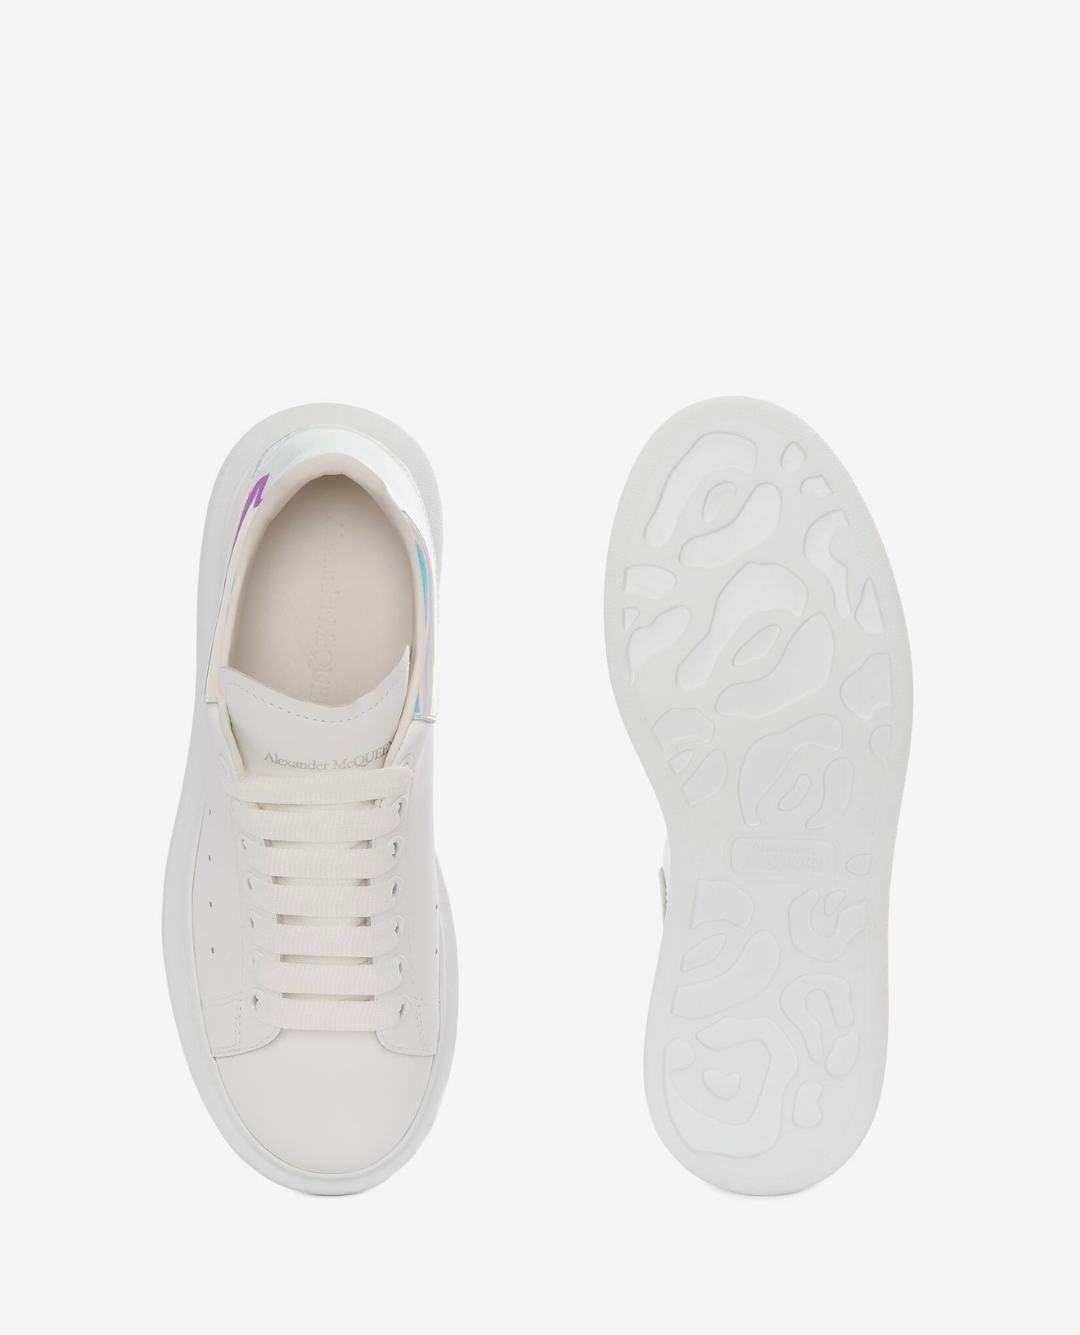 Alexander McQueen Oversized Sneaker (White/Shock Pink)